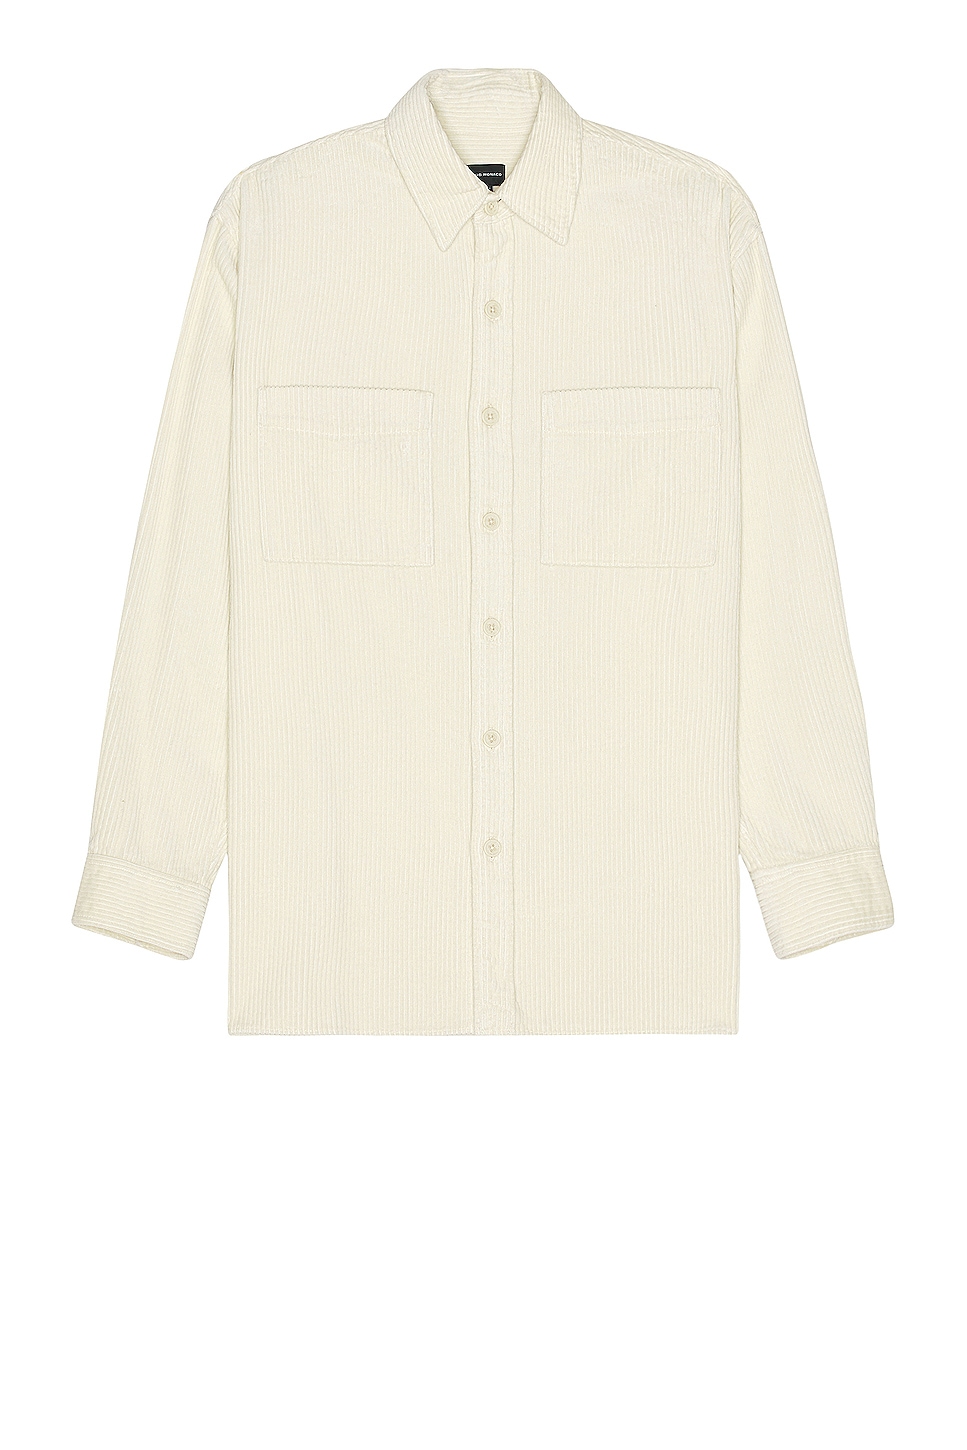 Wide Wale Corduroy Long Sleeve Shirt in Cream